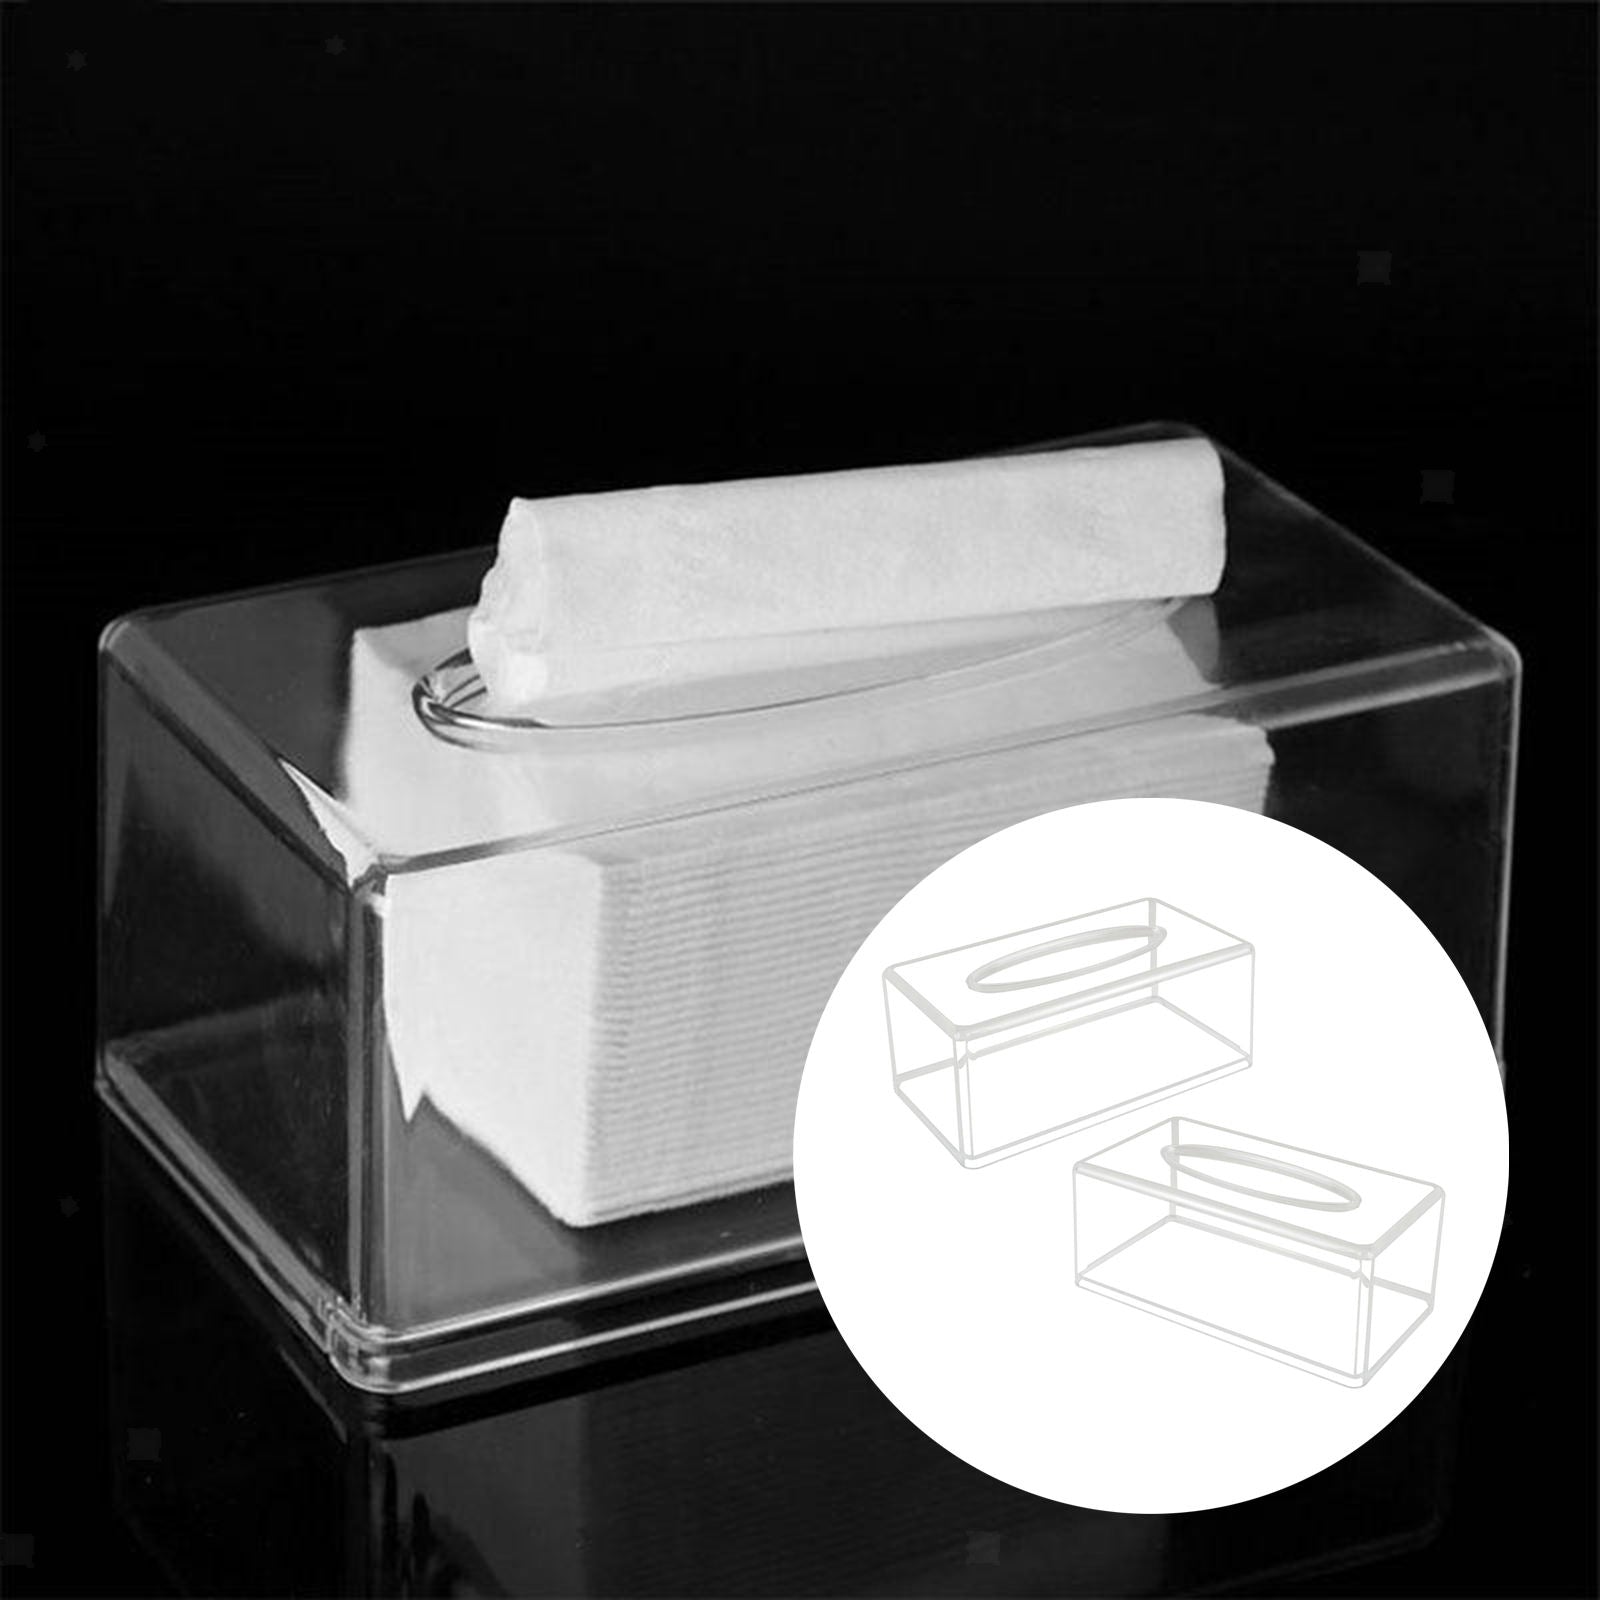 2 Pieces Modern Clear Acrylic Tissue Box Cover Decorative for Bathroom Desk